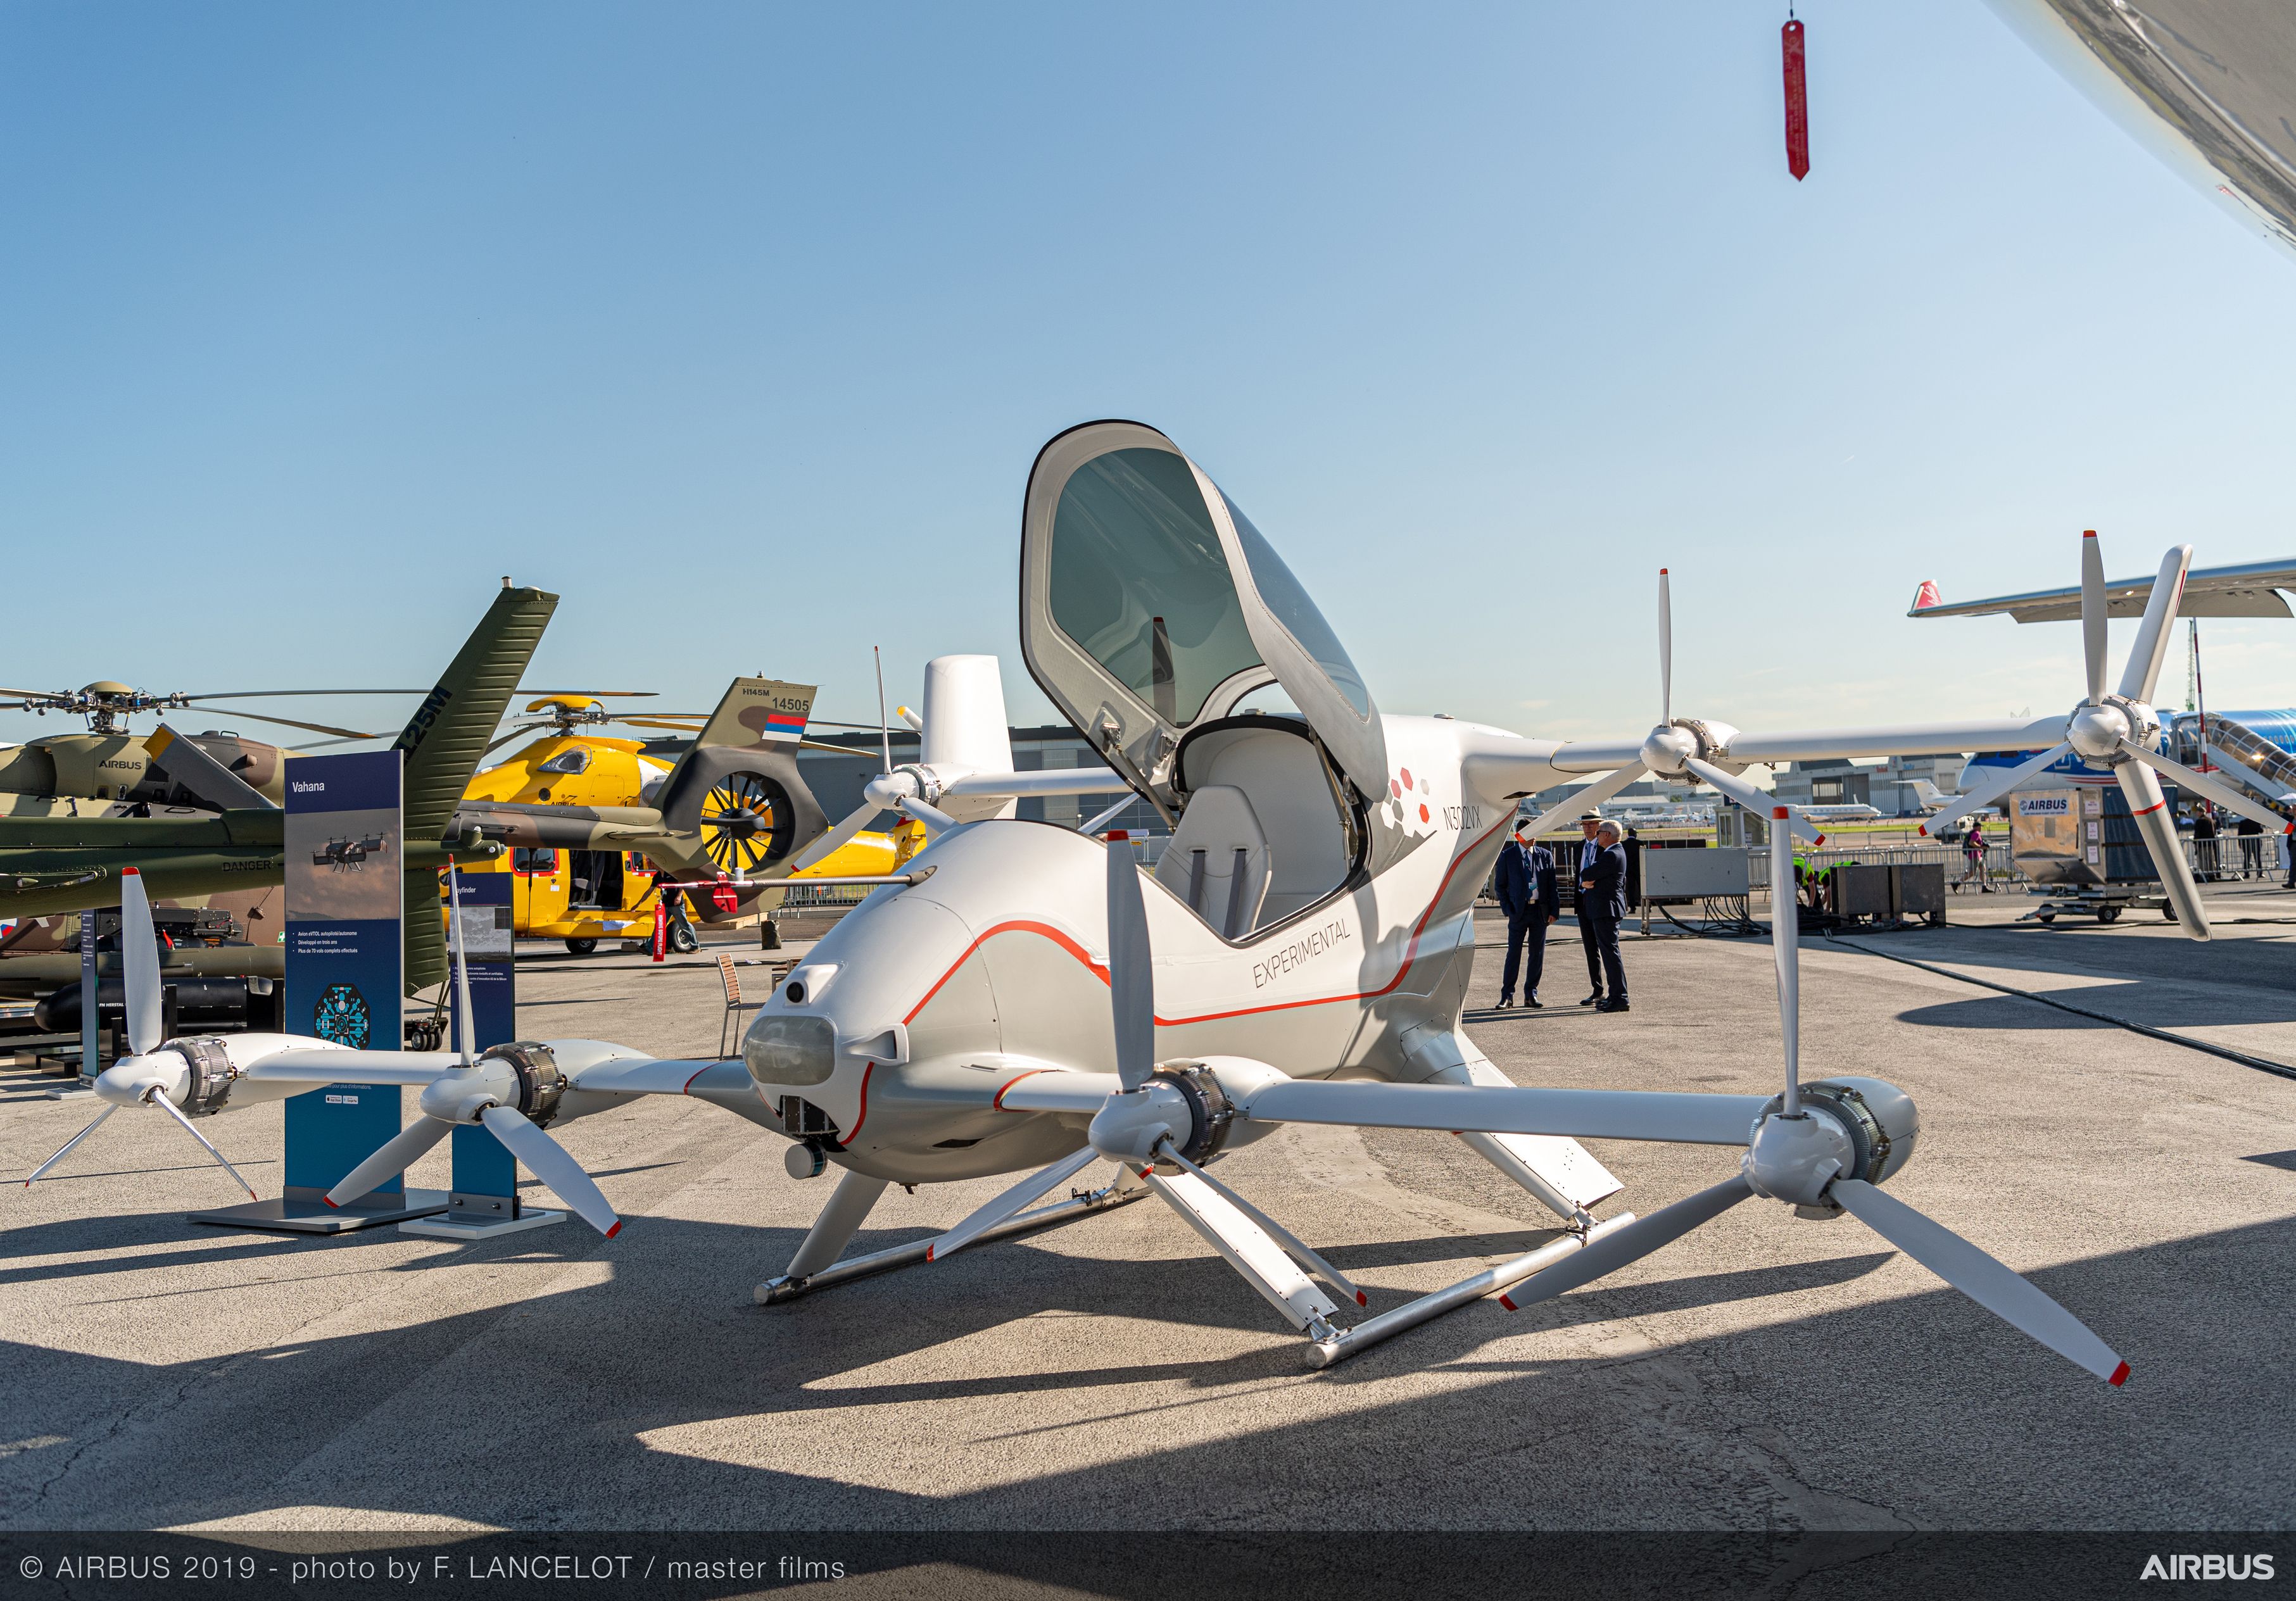 The Airbus Vahana on display at the Paris Air Show